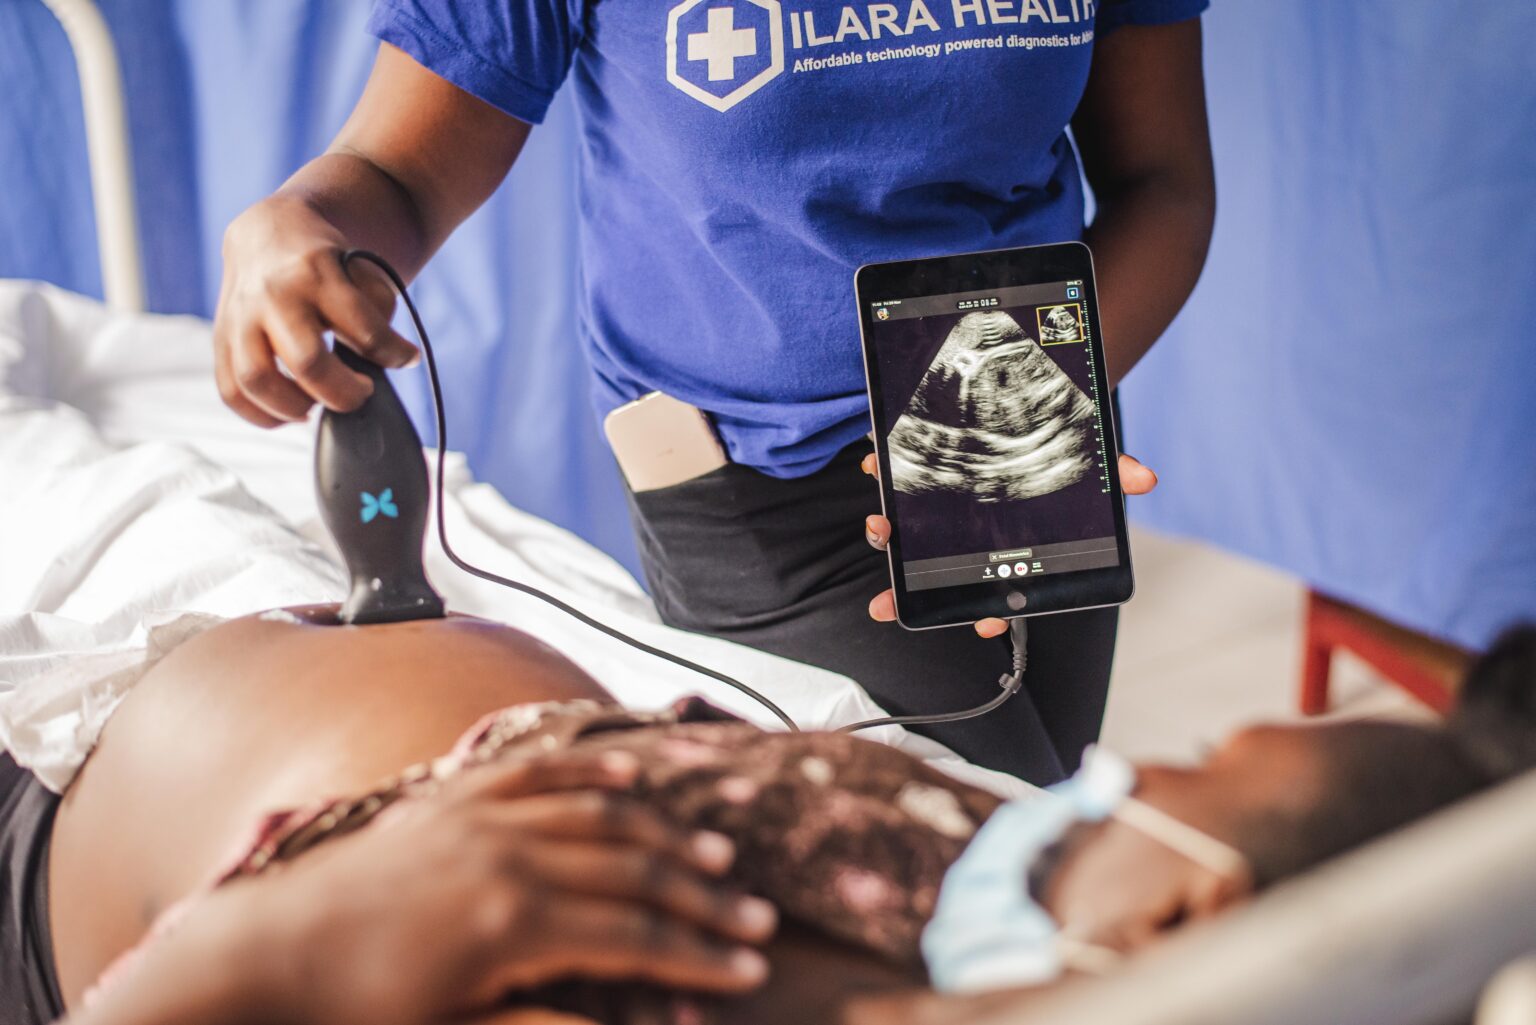 Ilara Health raises $3.75m Series A led by TLcom